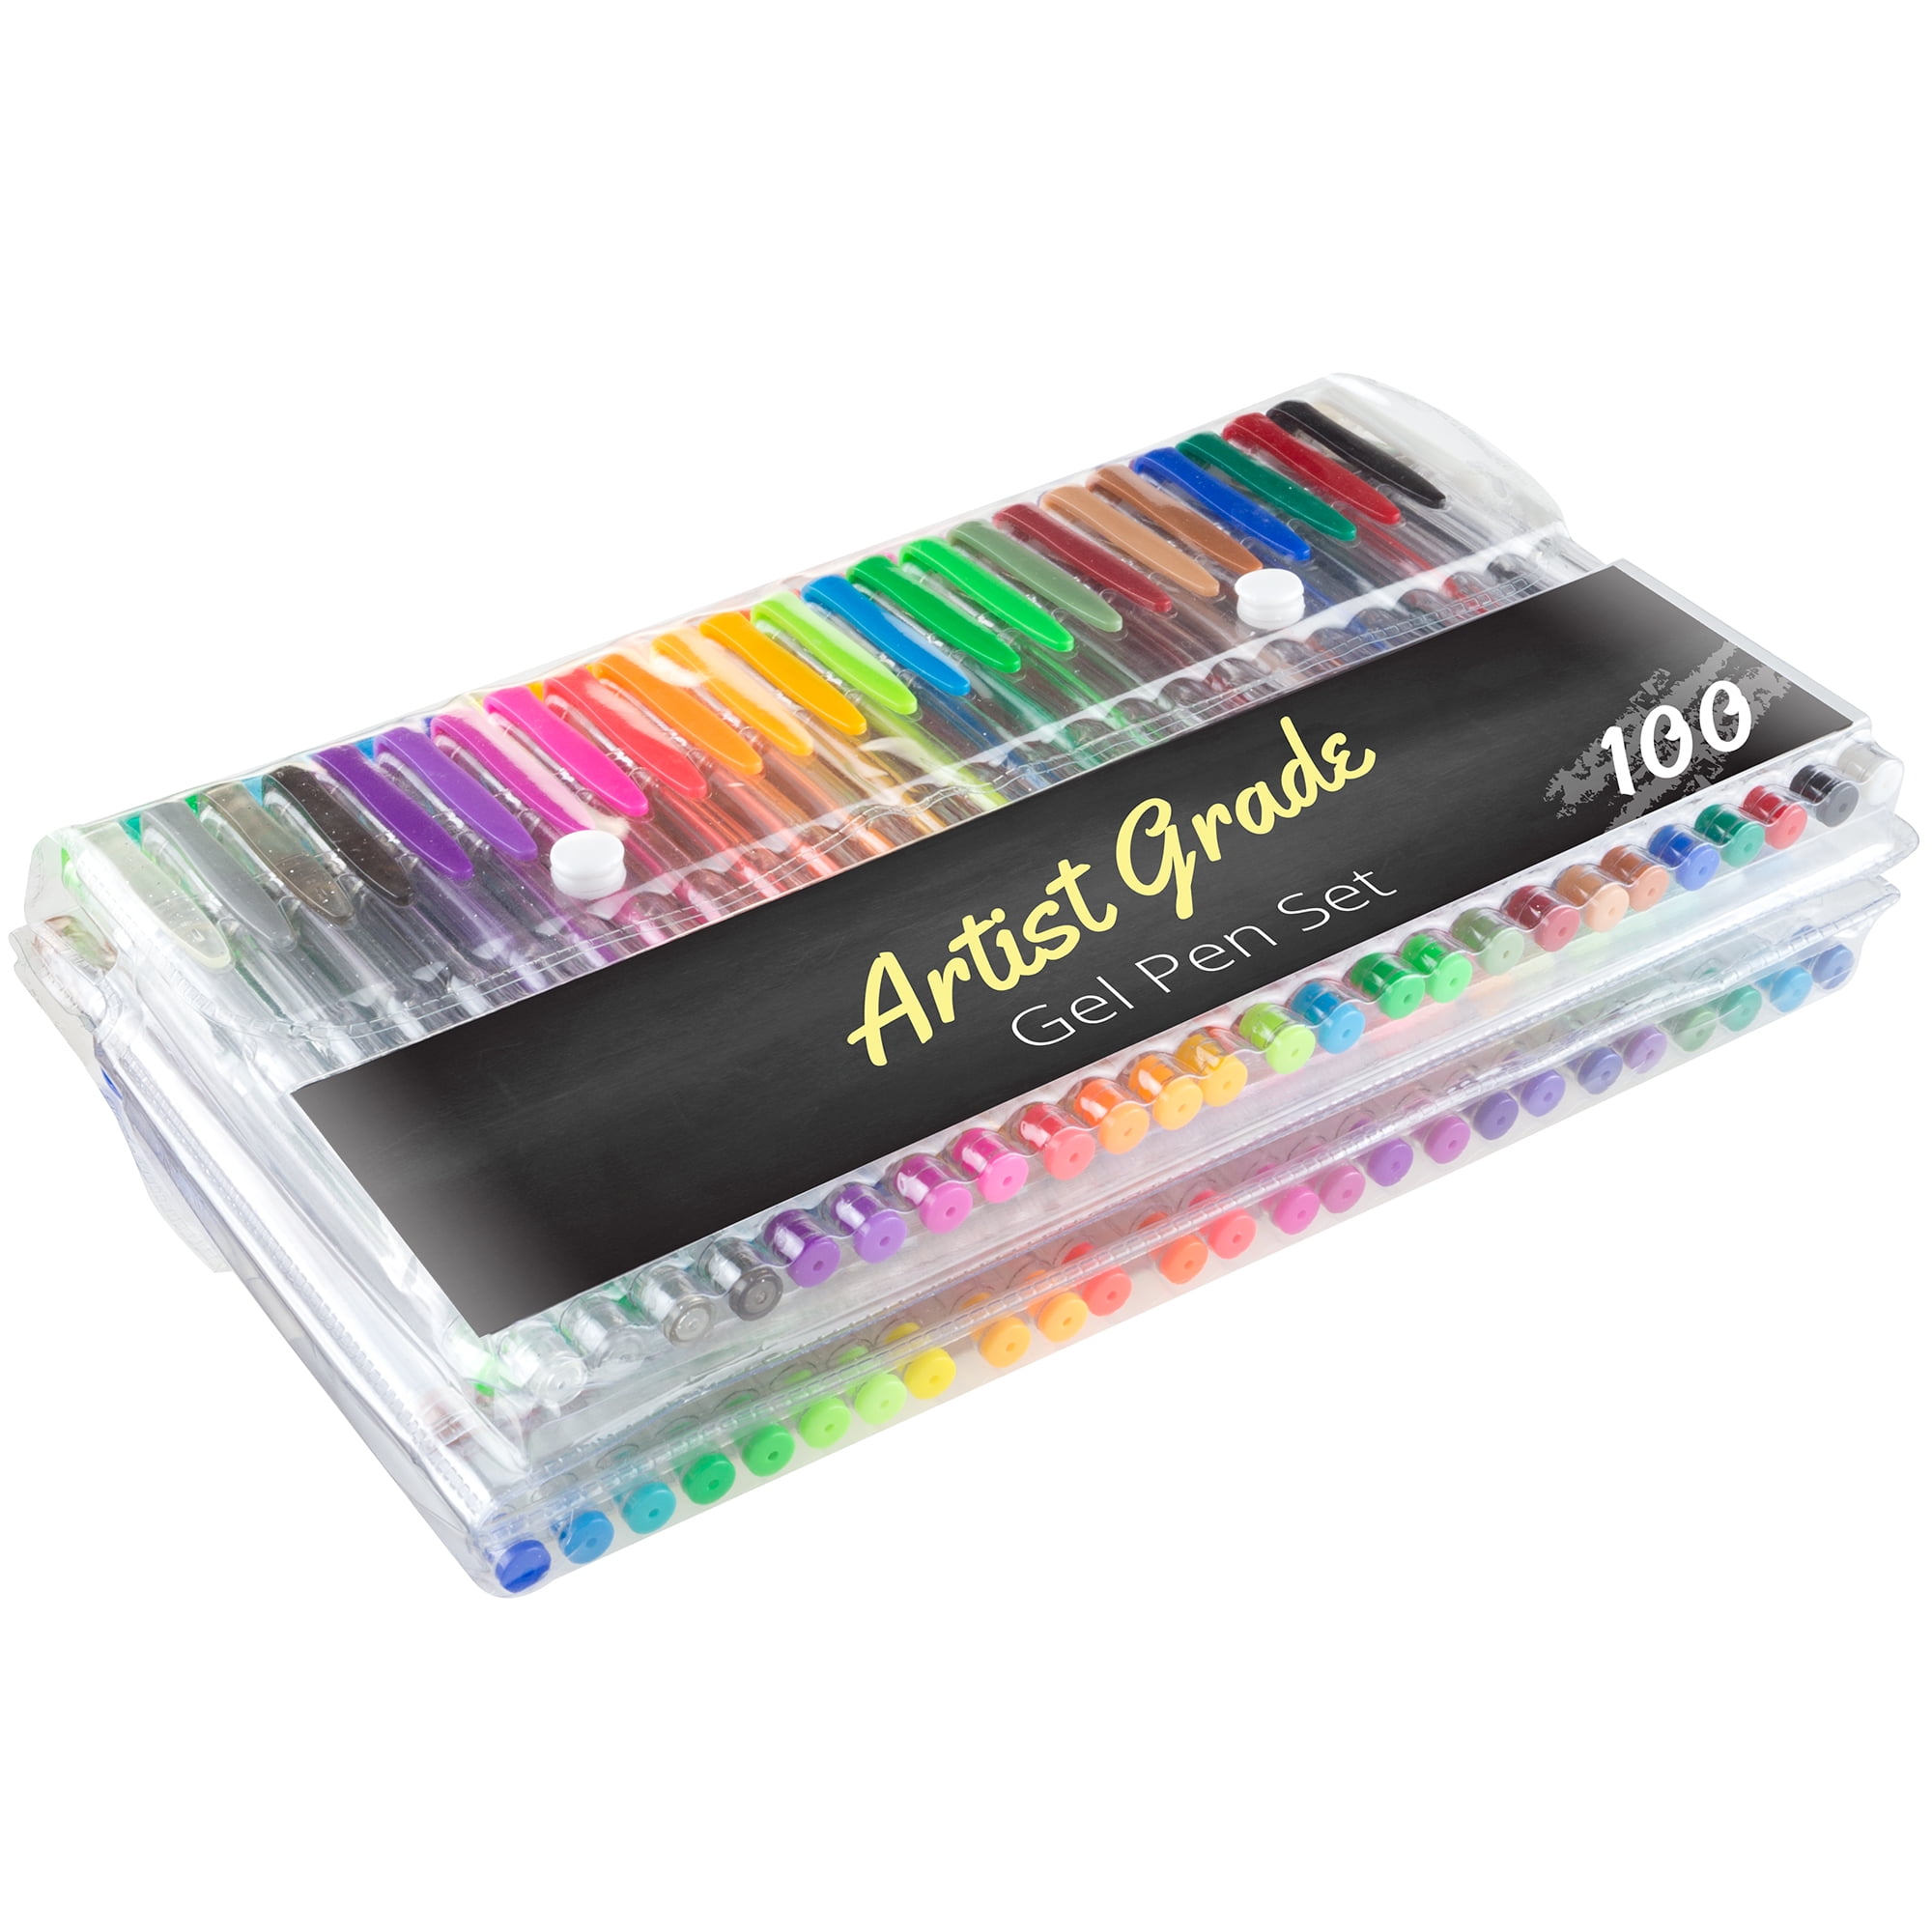 ZSCM 100 Unique Colors Gel Pens Set With Case for Adult Coloring Books Drawin... 